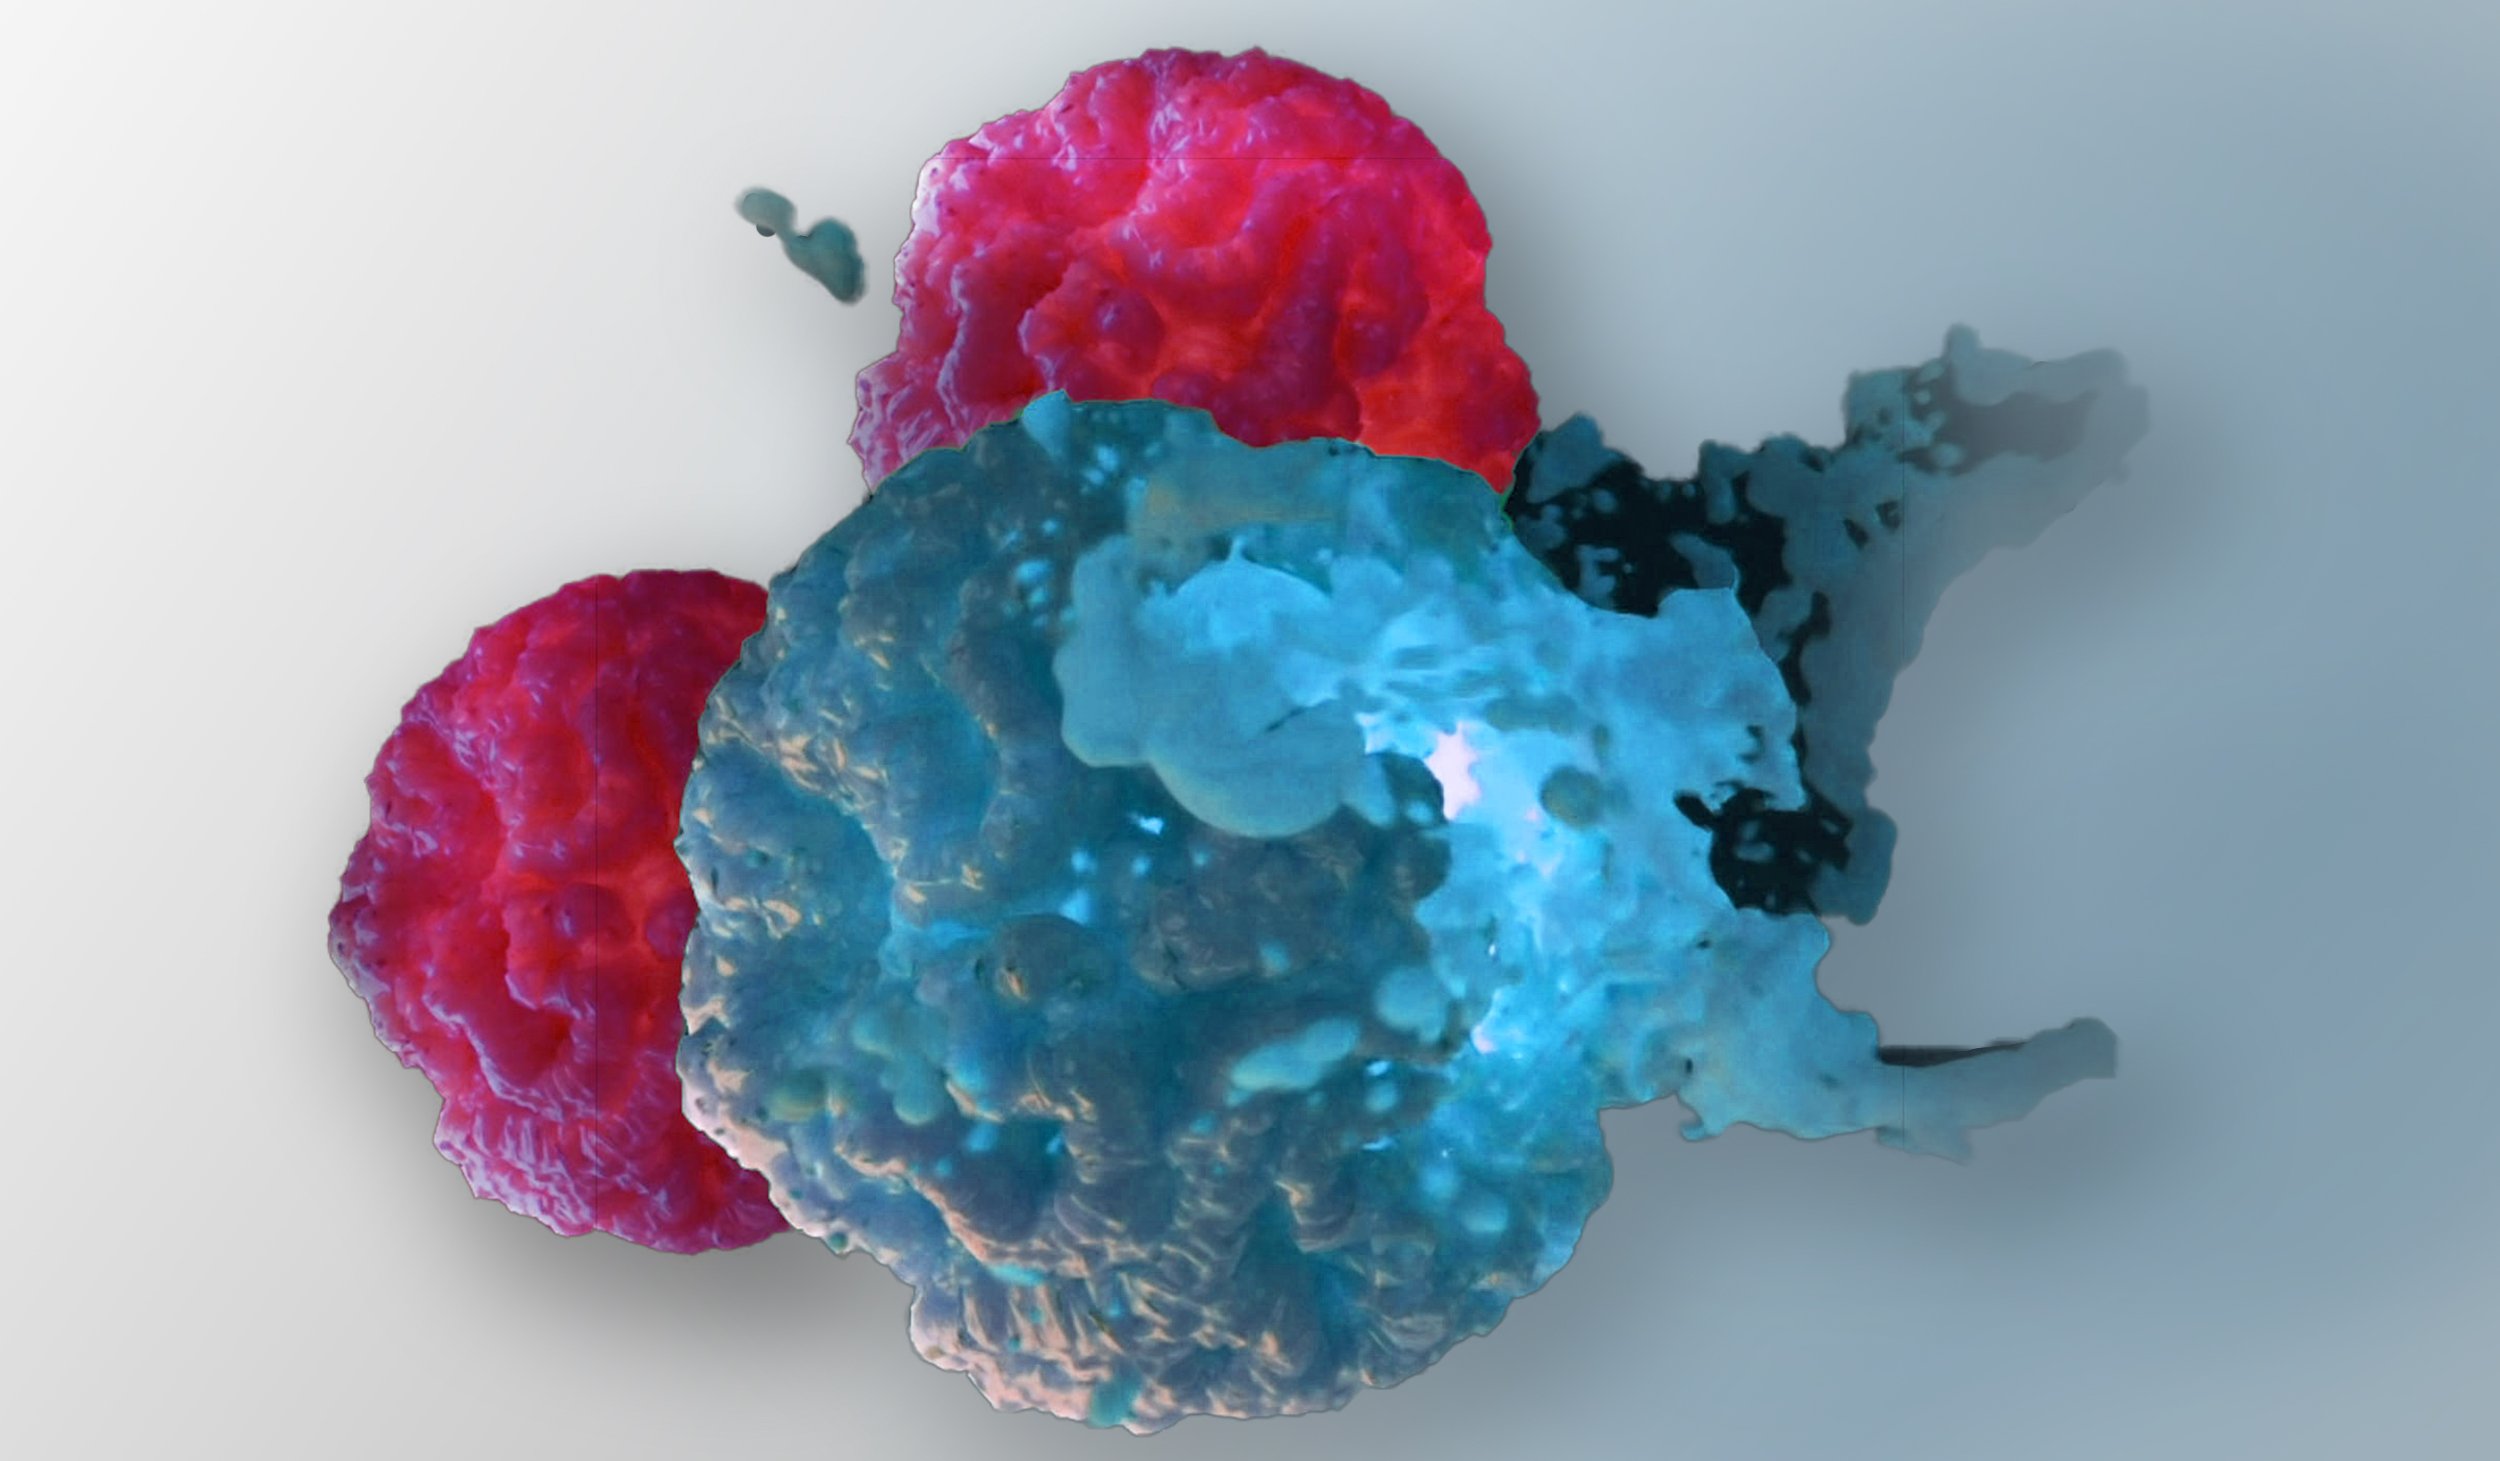 Immuno oncology imaging assays